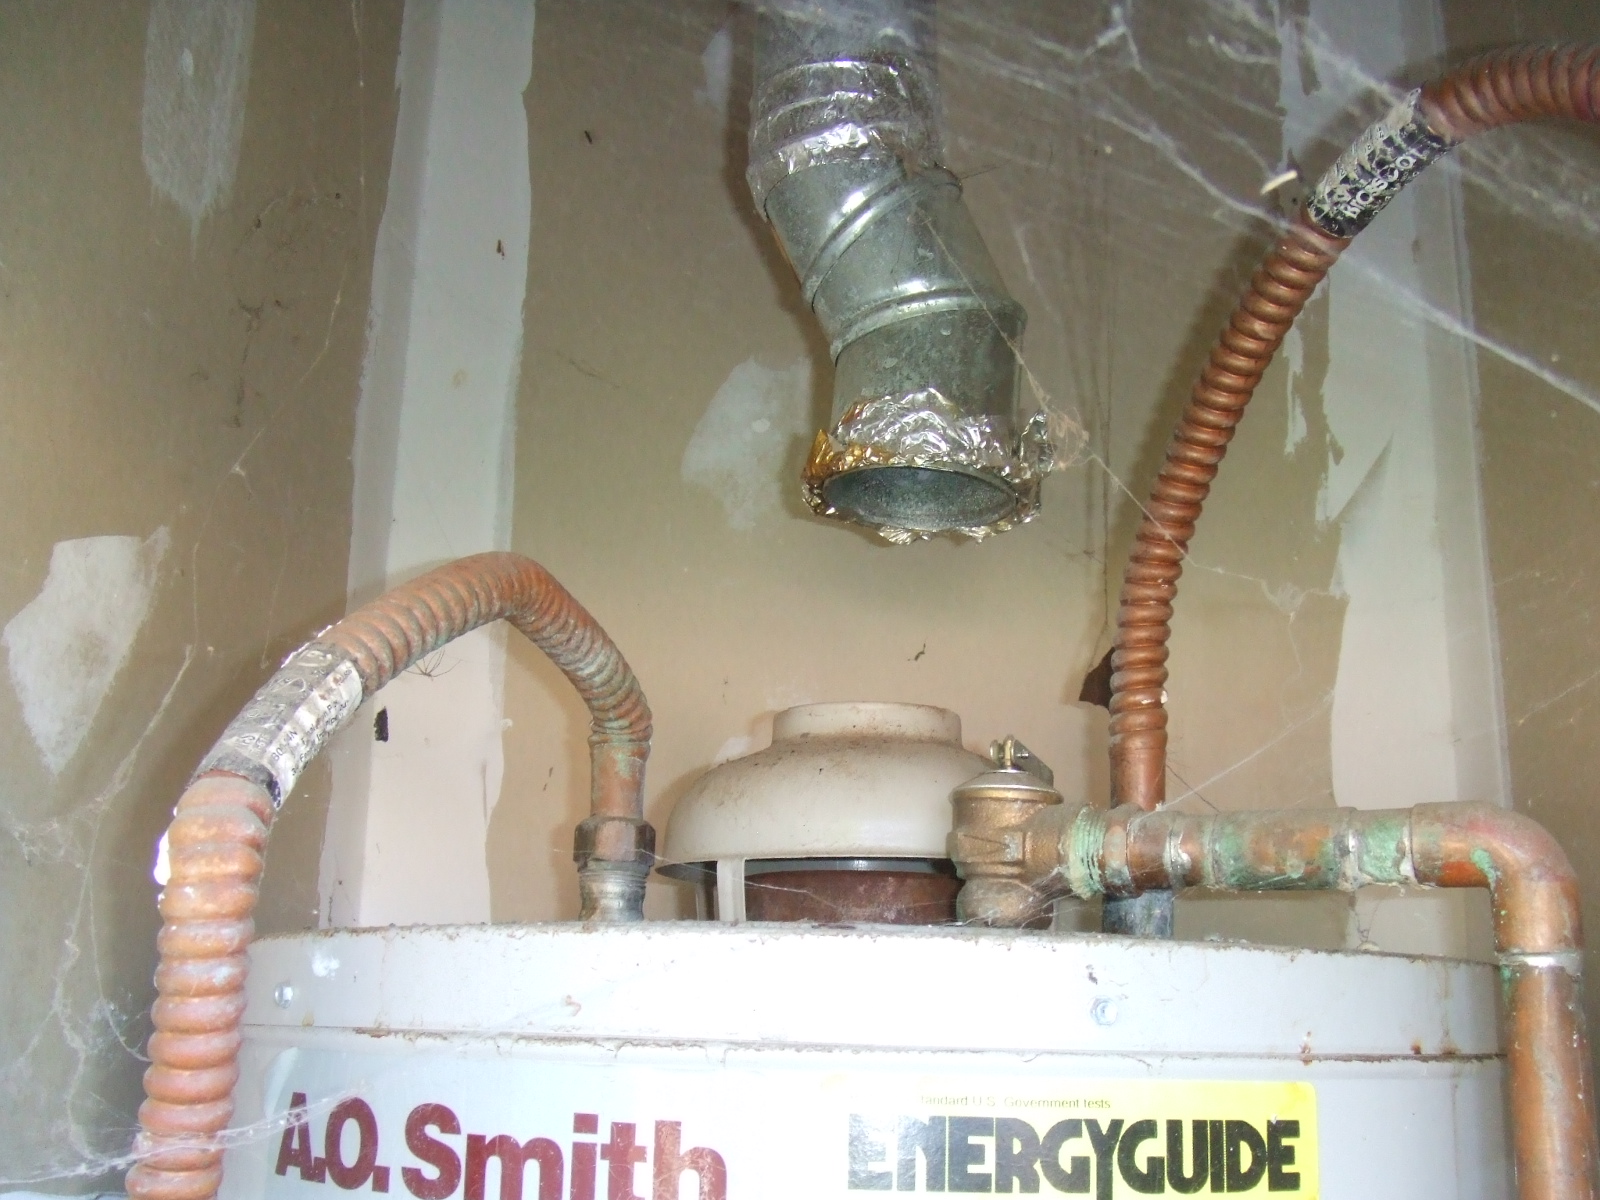 Missing water heater flue collar. Carbon Monoxide entering the house